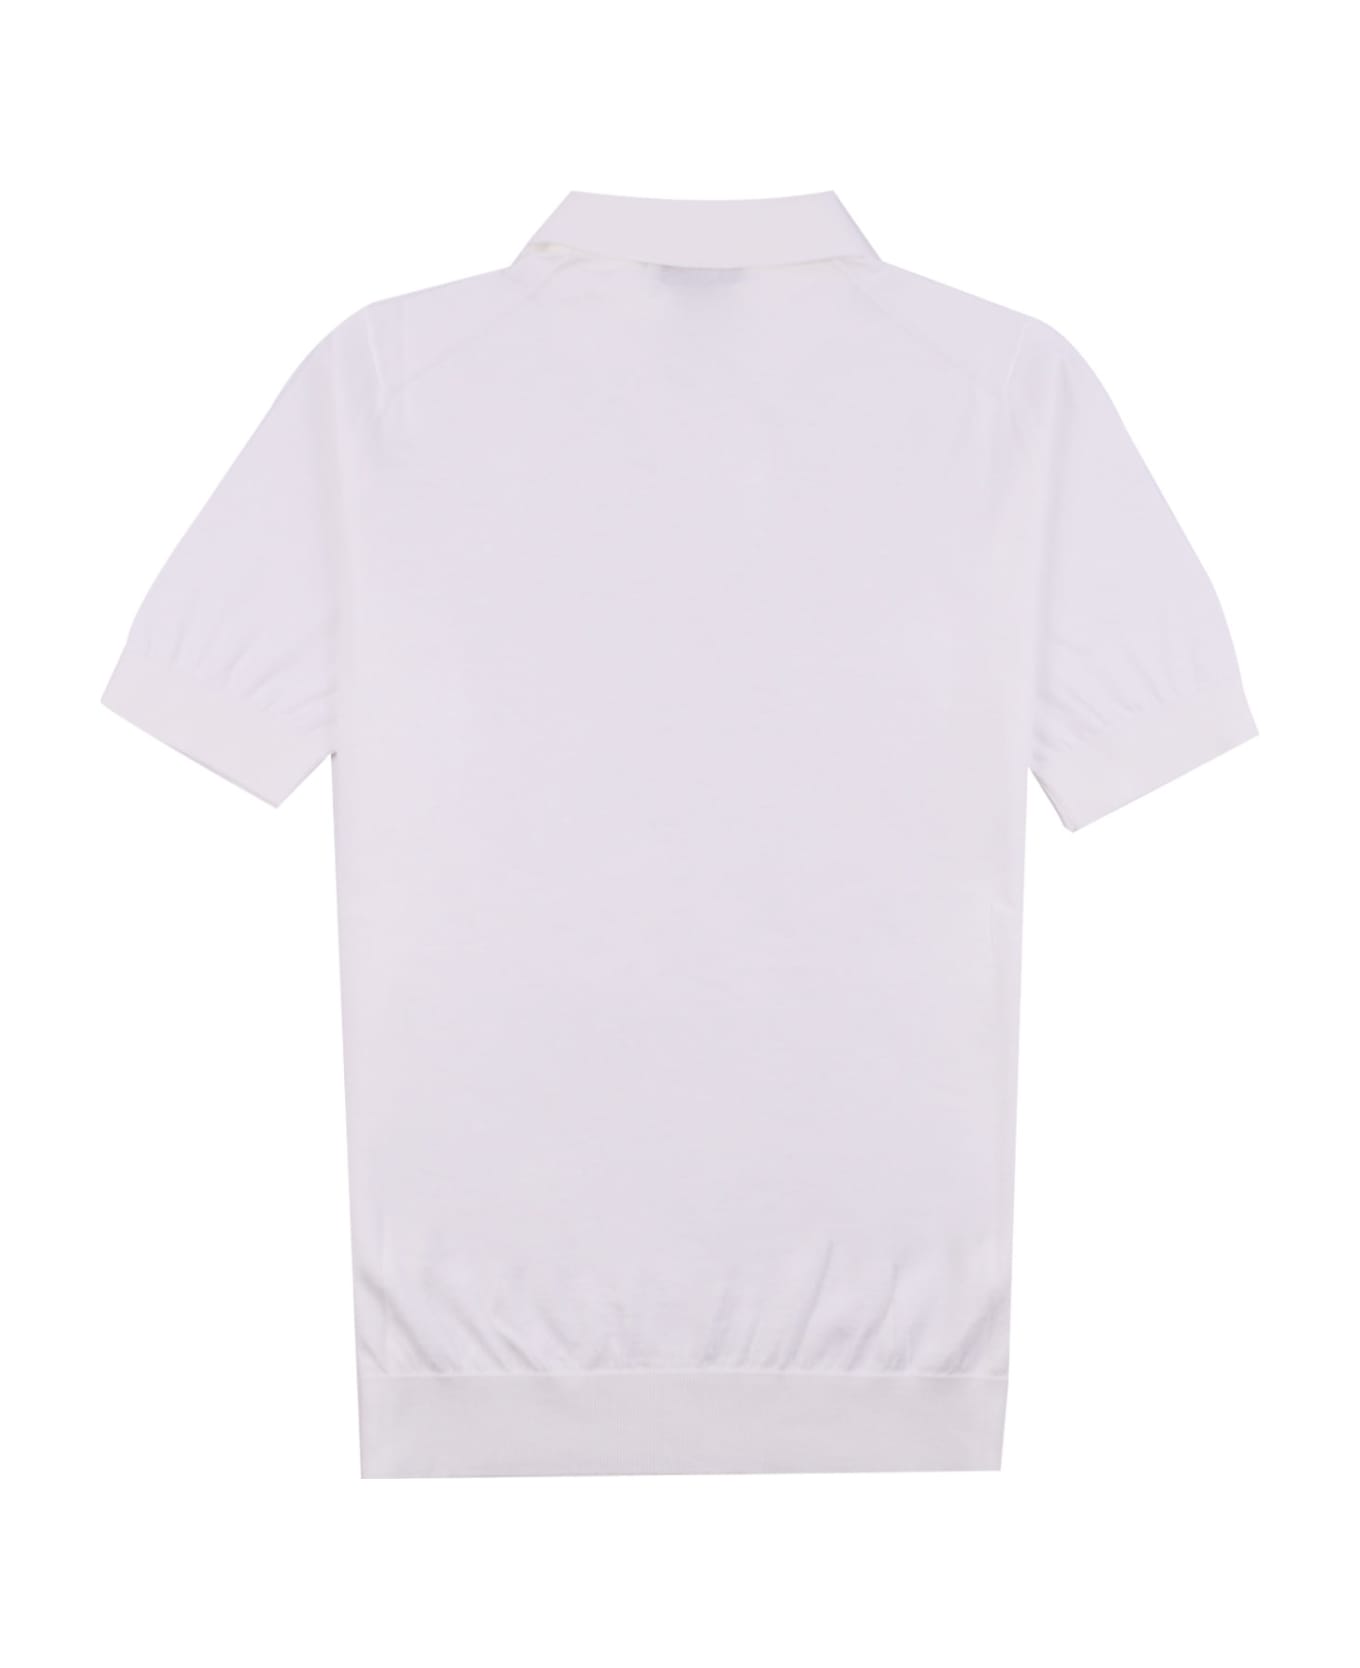 Filippo De Laurentiis T-shirt - White